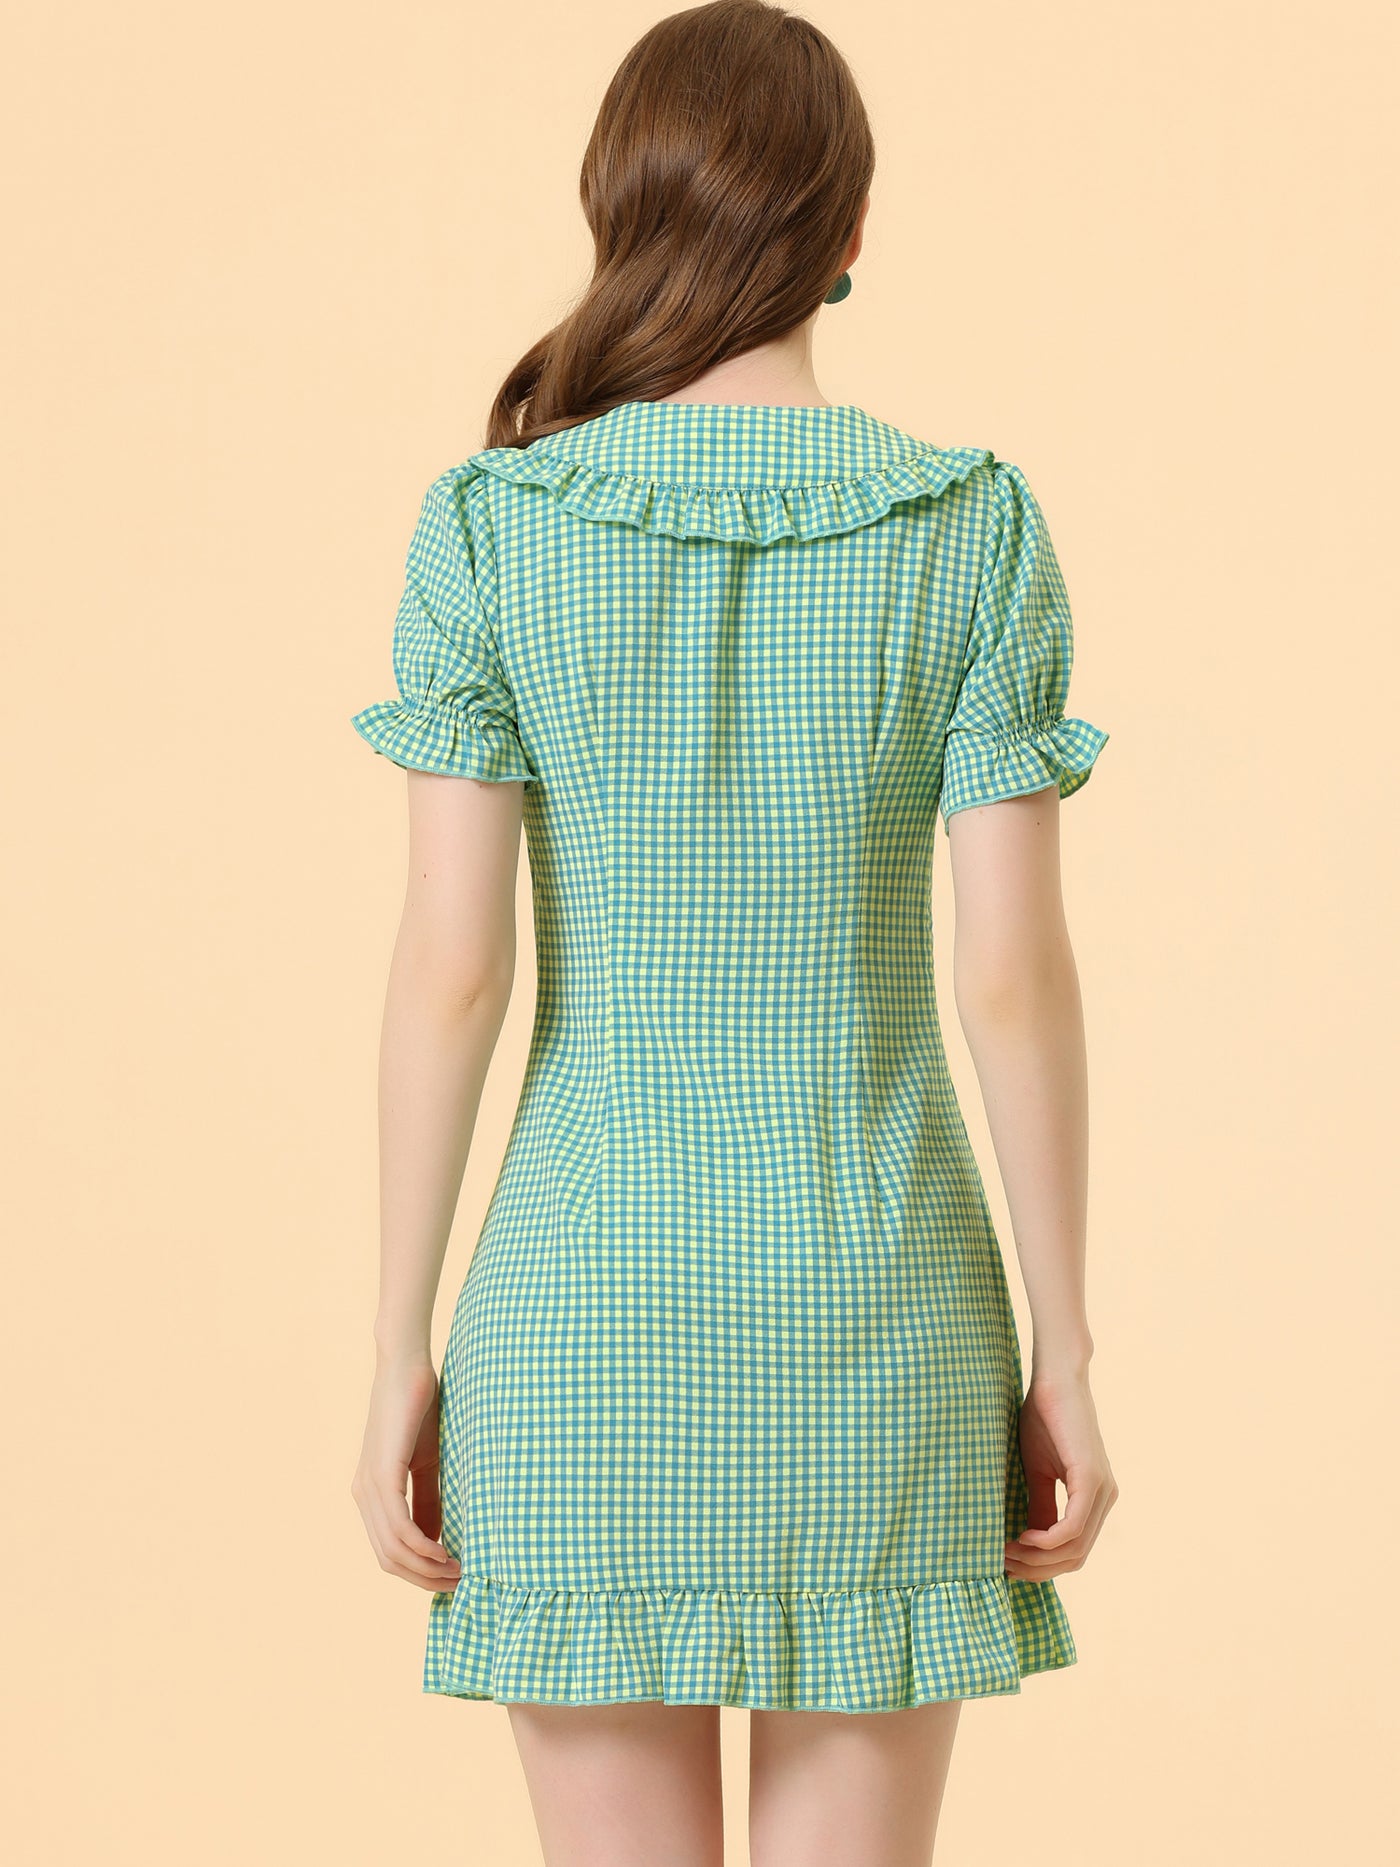 Allegra K Gingham Checks Ruffled Peter Pan Collar 1960s Vintage Mini Dress